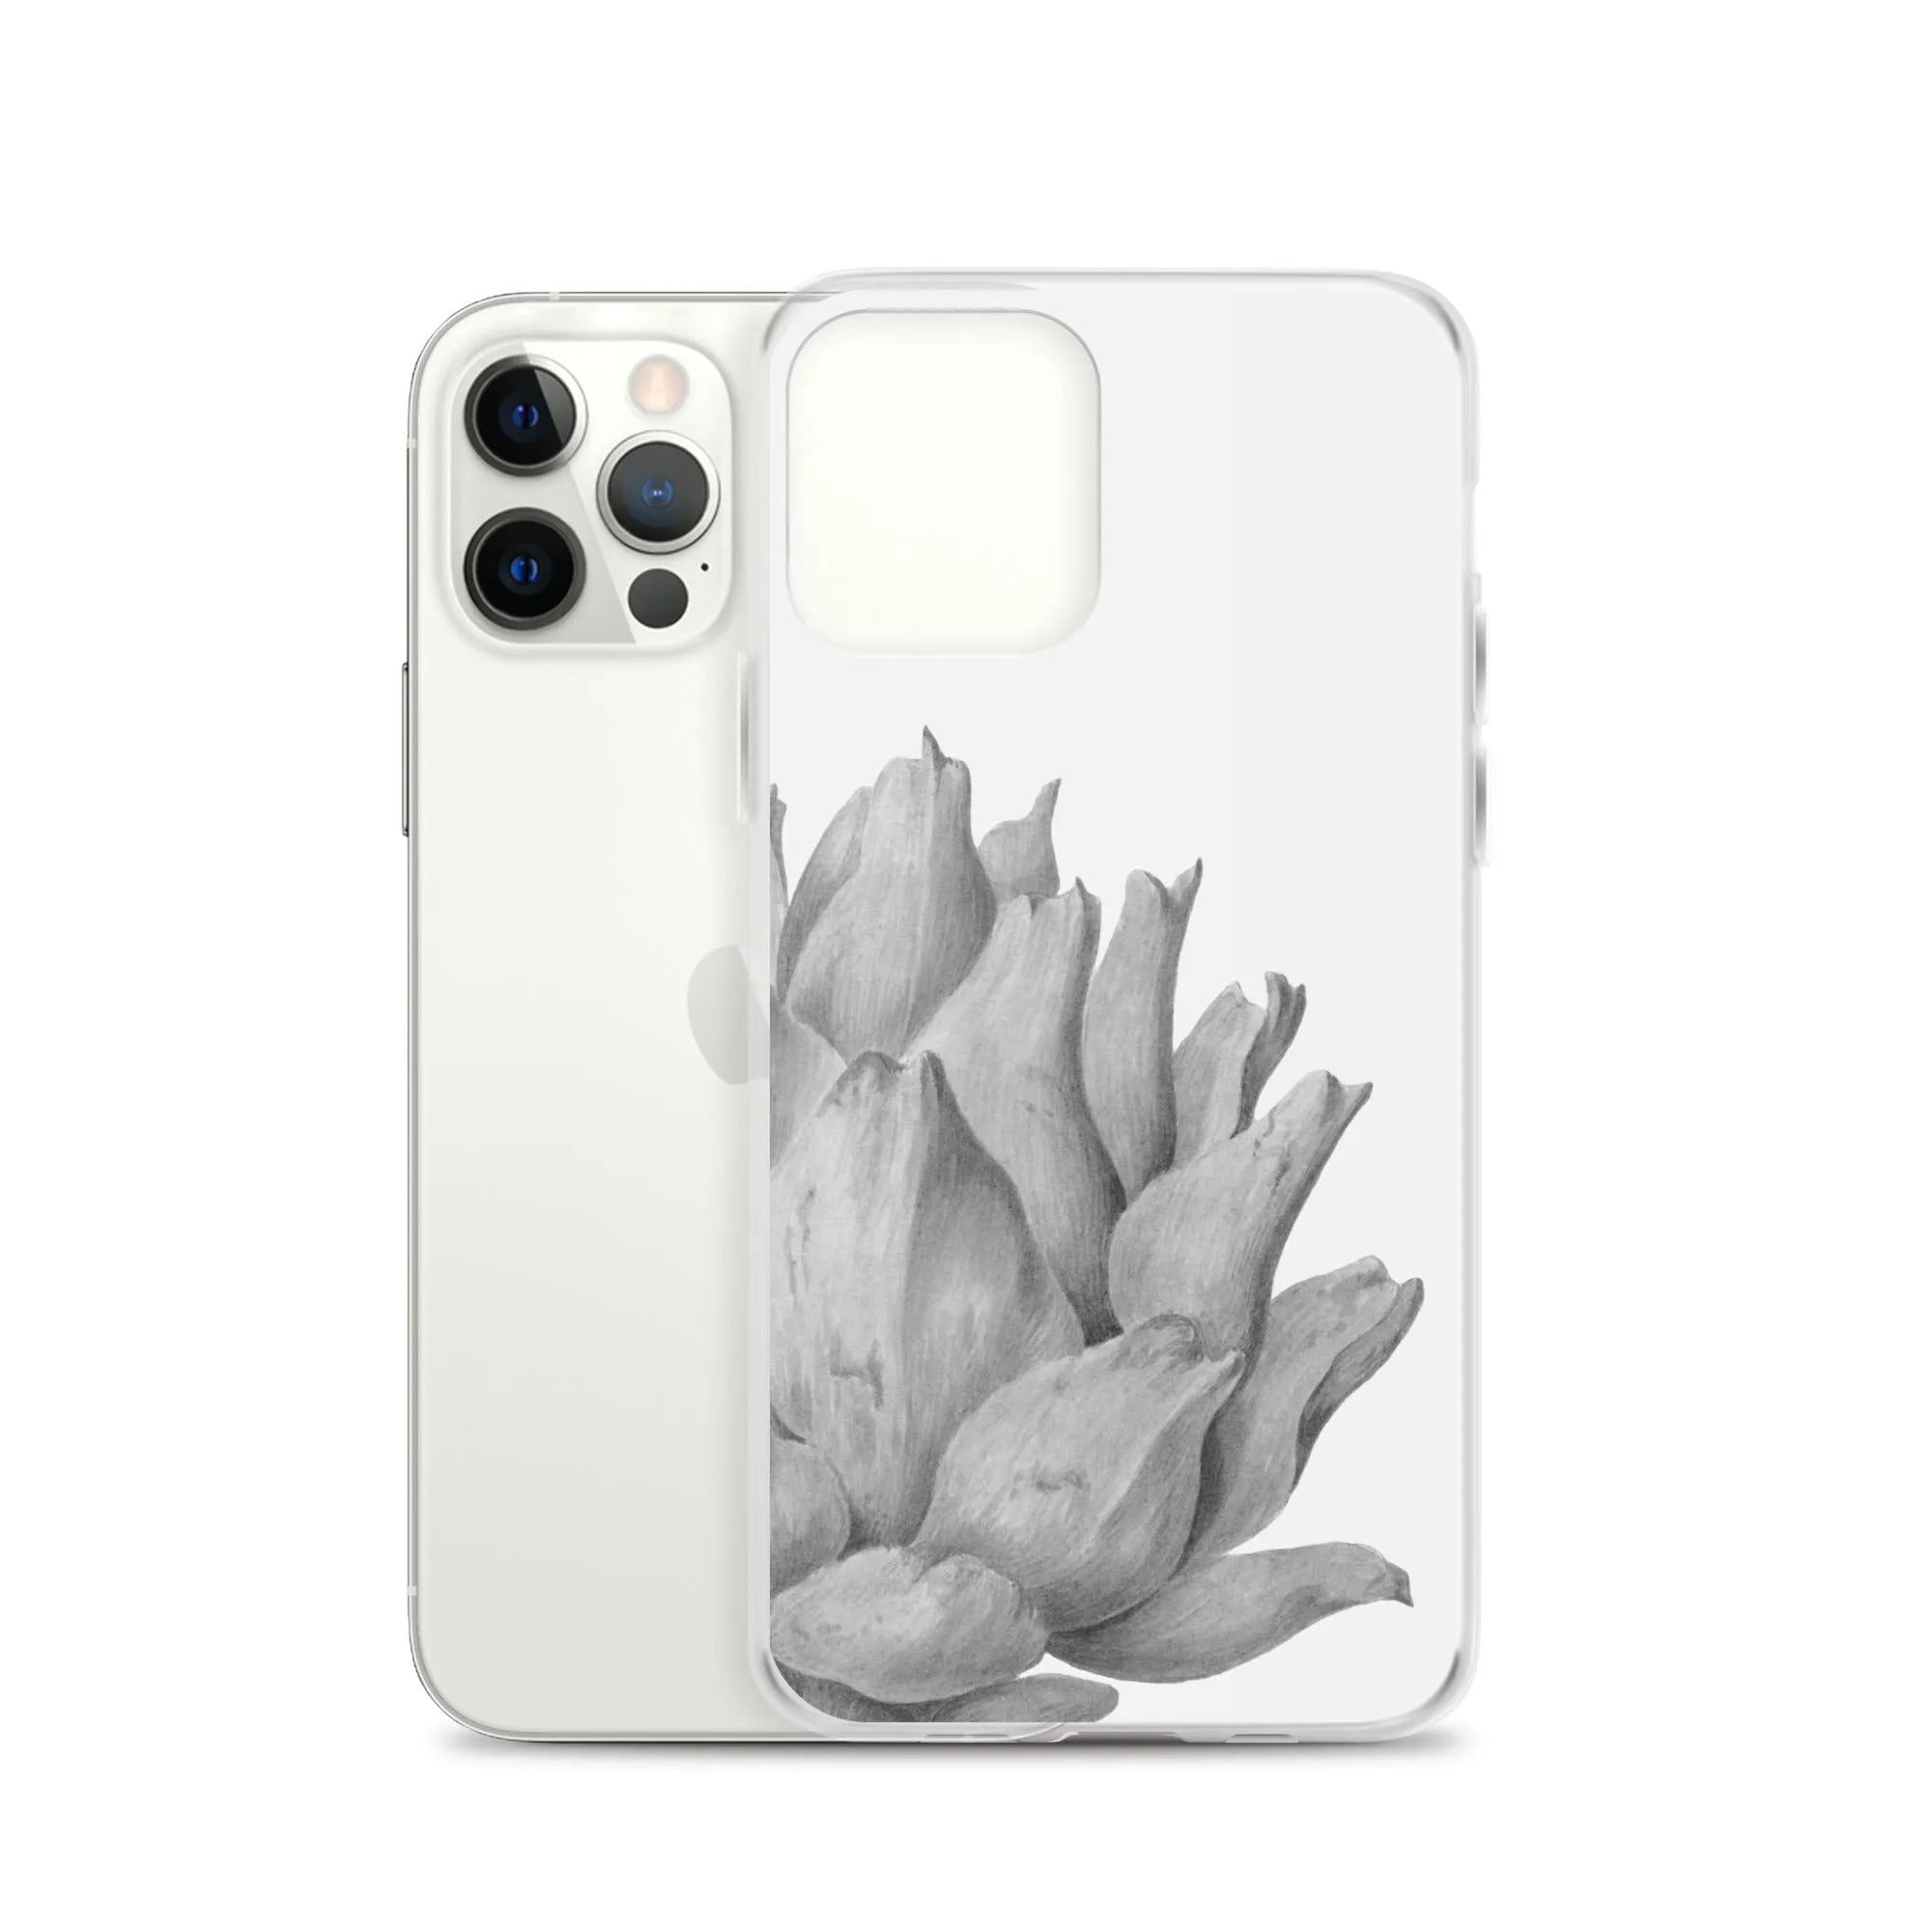 Heartichoke Botanical Art Iphone Case - Black And White - Iphone 12 Pro - Mobile Phone Cases - Aesthetic Art